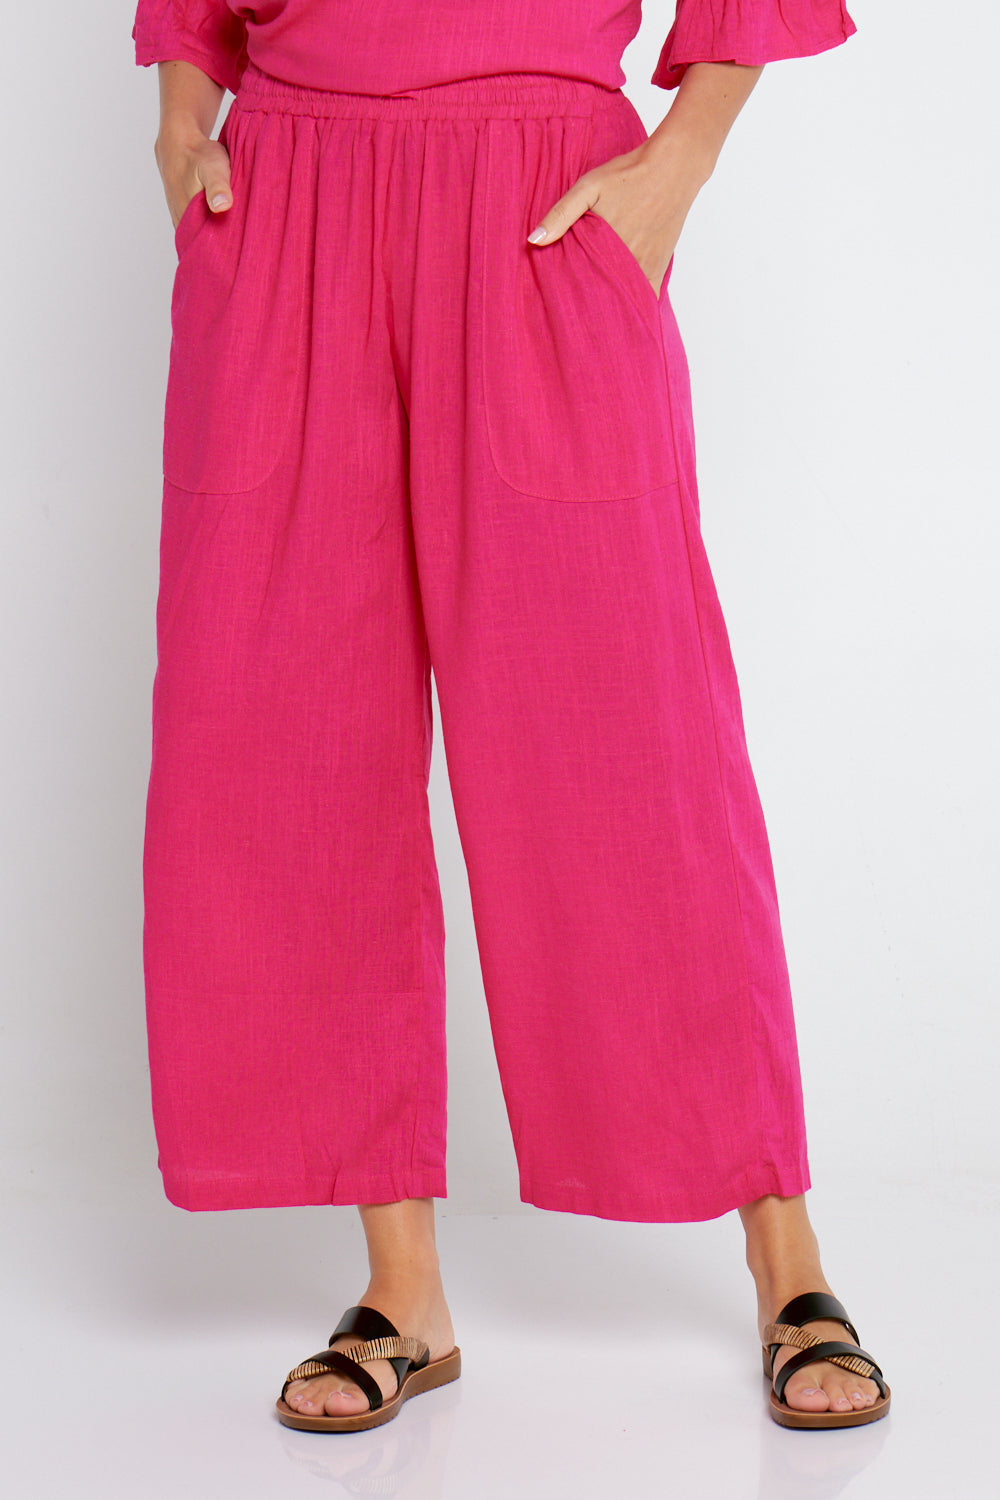 Aiko Linen Pants - Hot Pink  Mature Women's Casual Clothes – TULIO Fashion